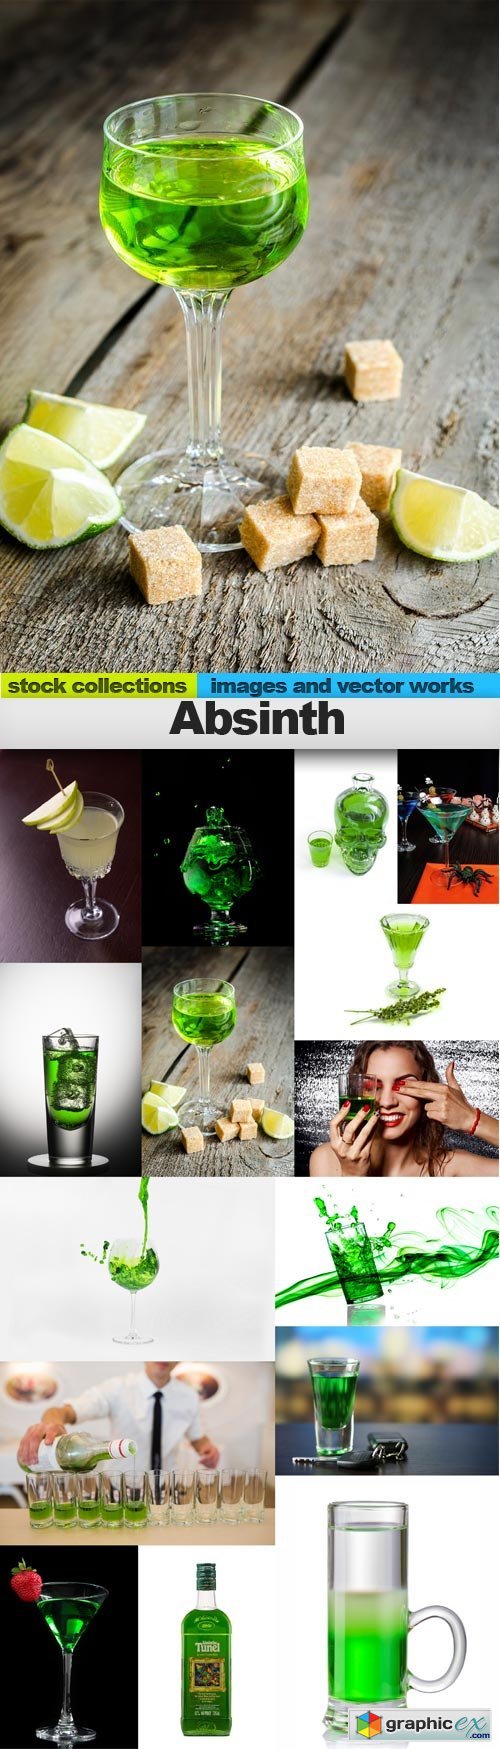 Absinth, 15 x UHQ JPEG